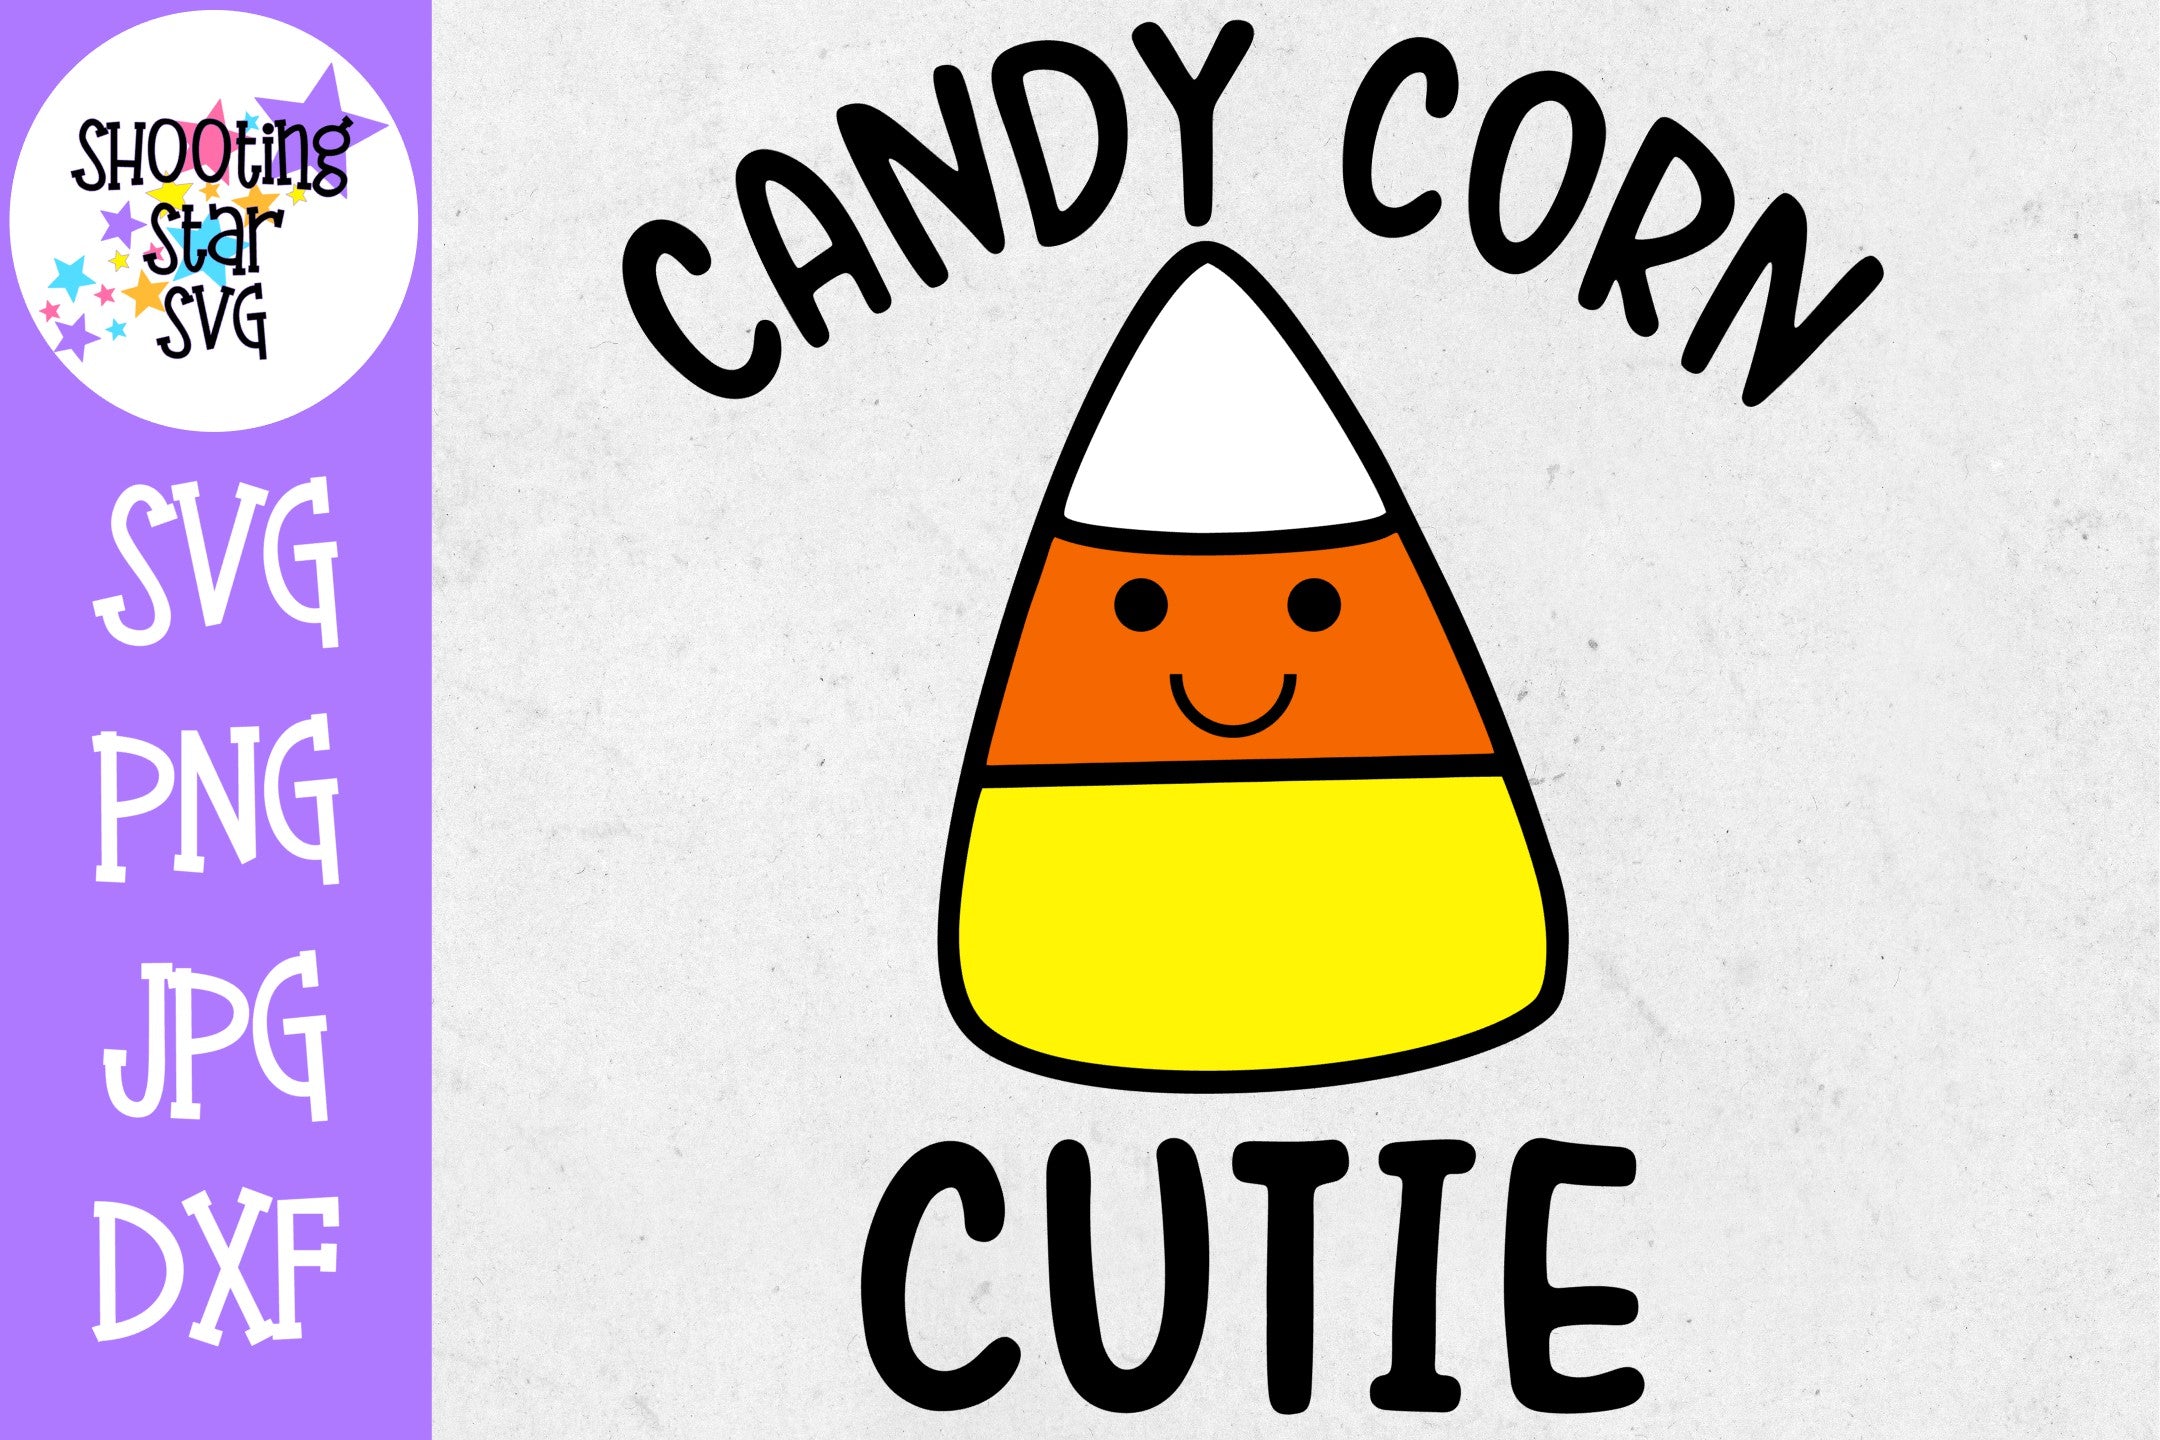 Candy Corn Cutie SVG - Fall SVG - Halloween SVG